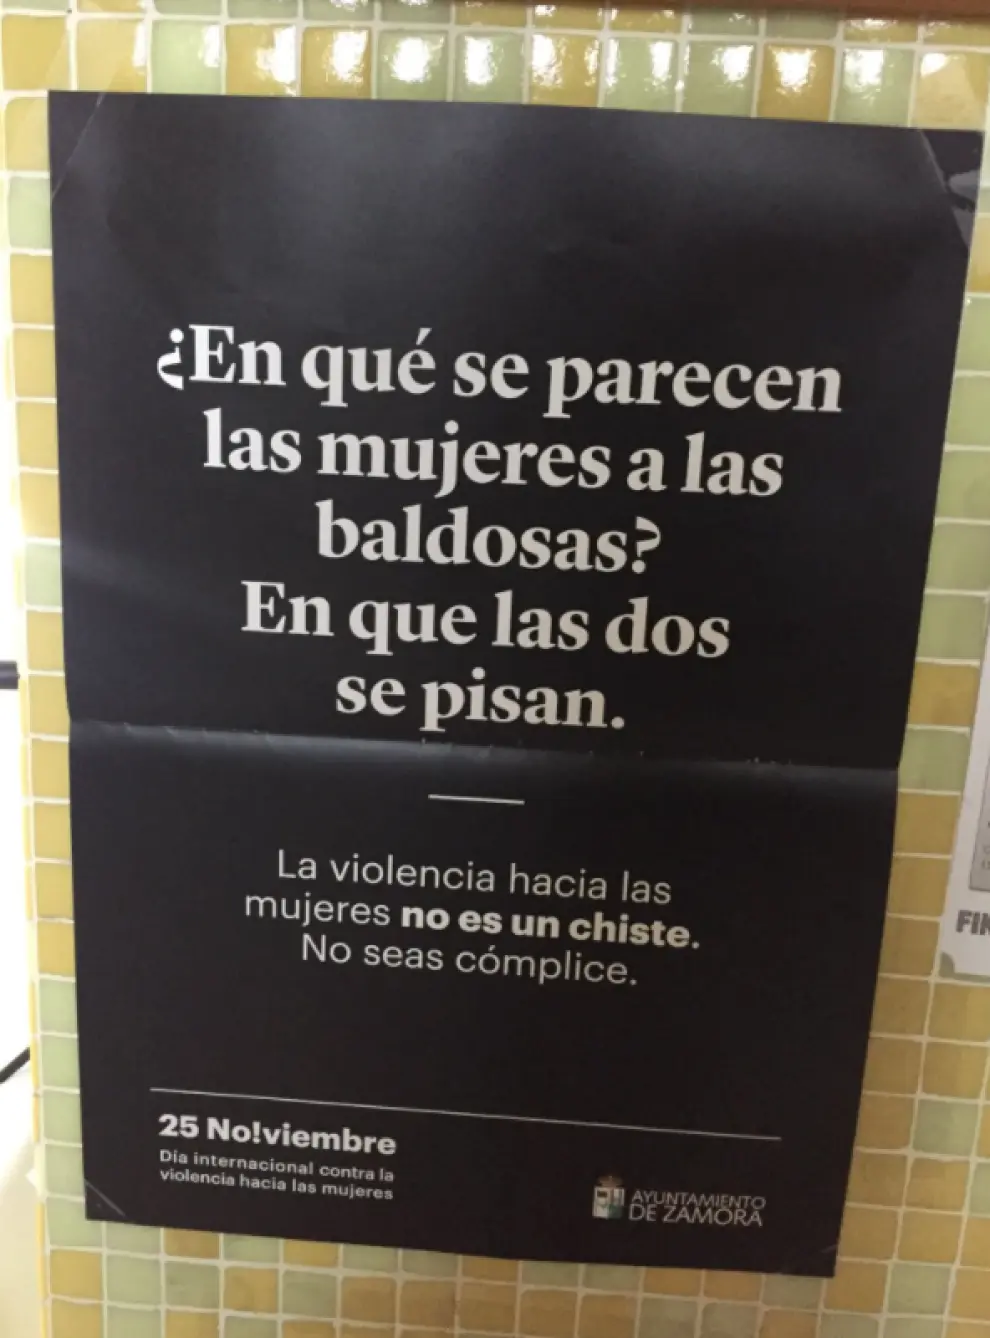 Polémica campaña que usa chistes machistas para concienciar sobre la violencia de género